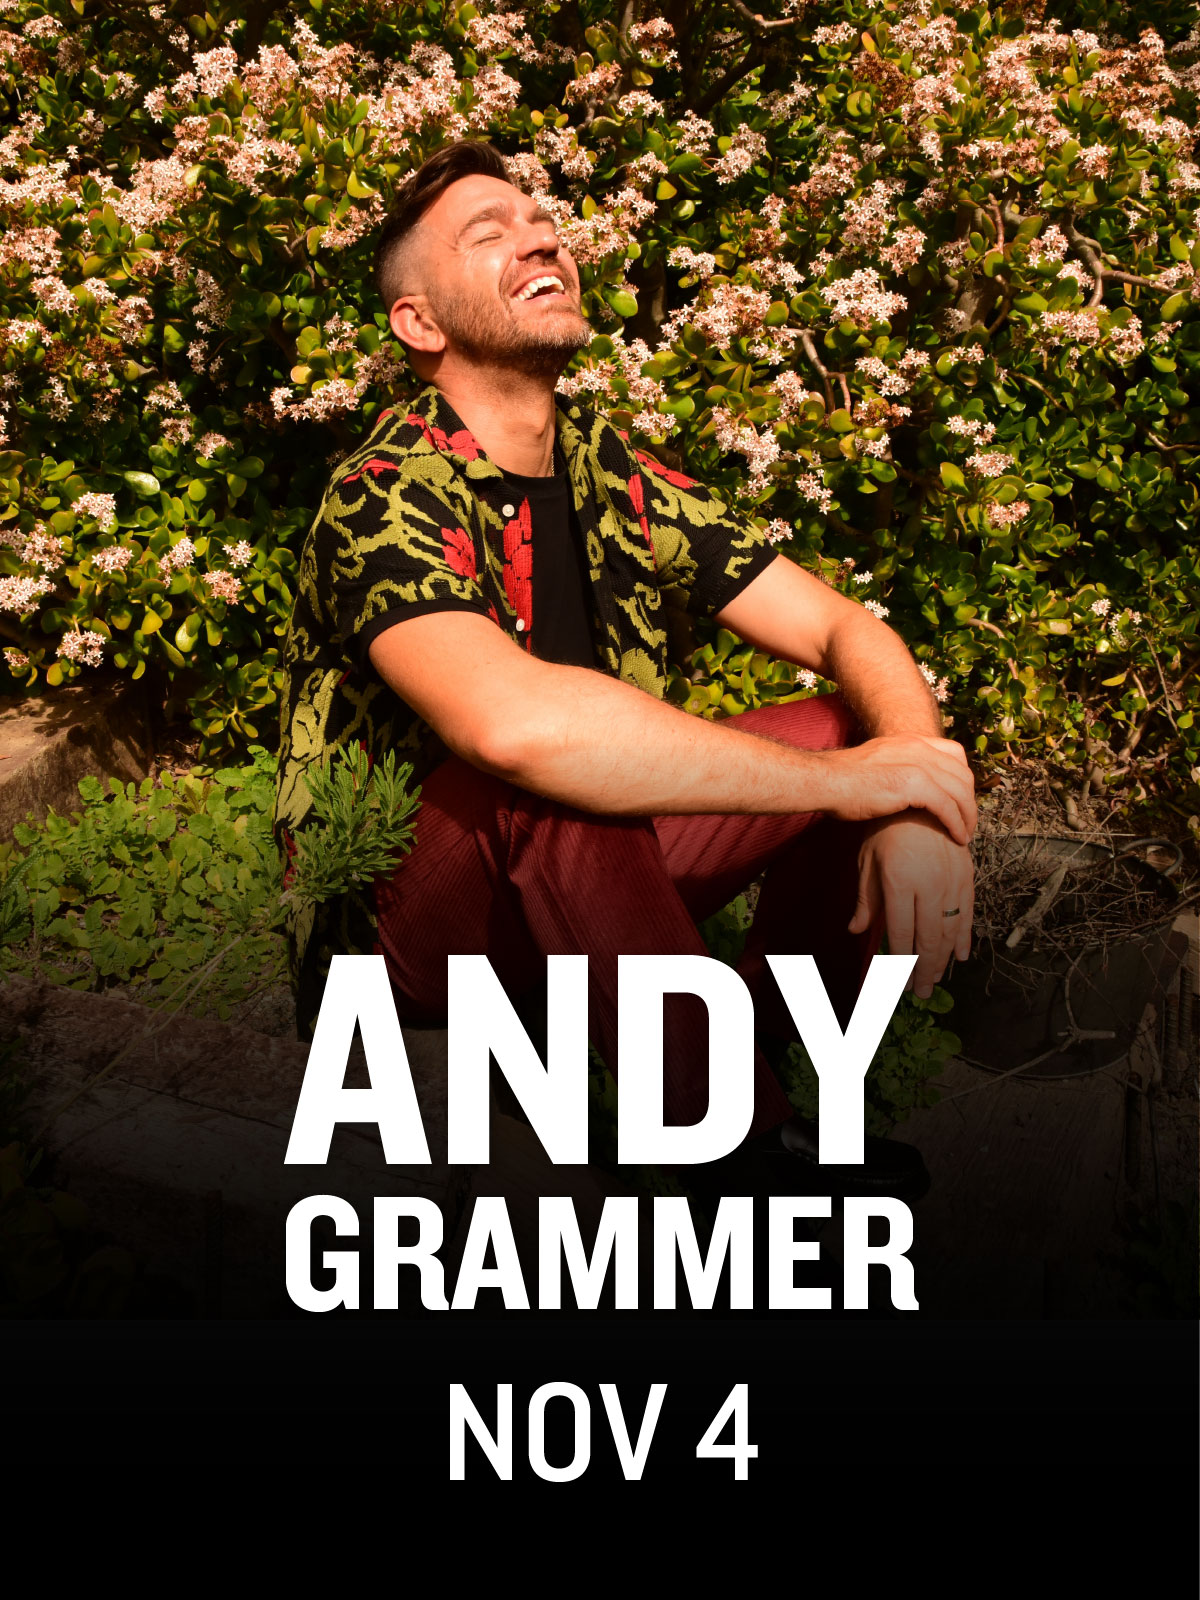 Andy Grammer concert